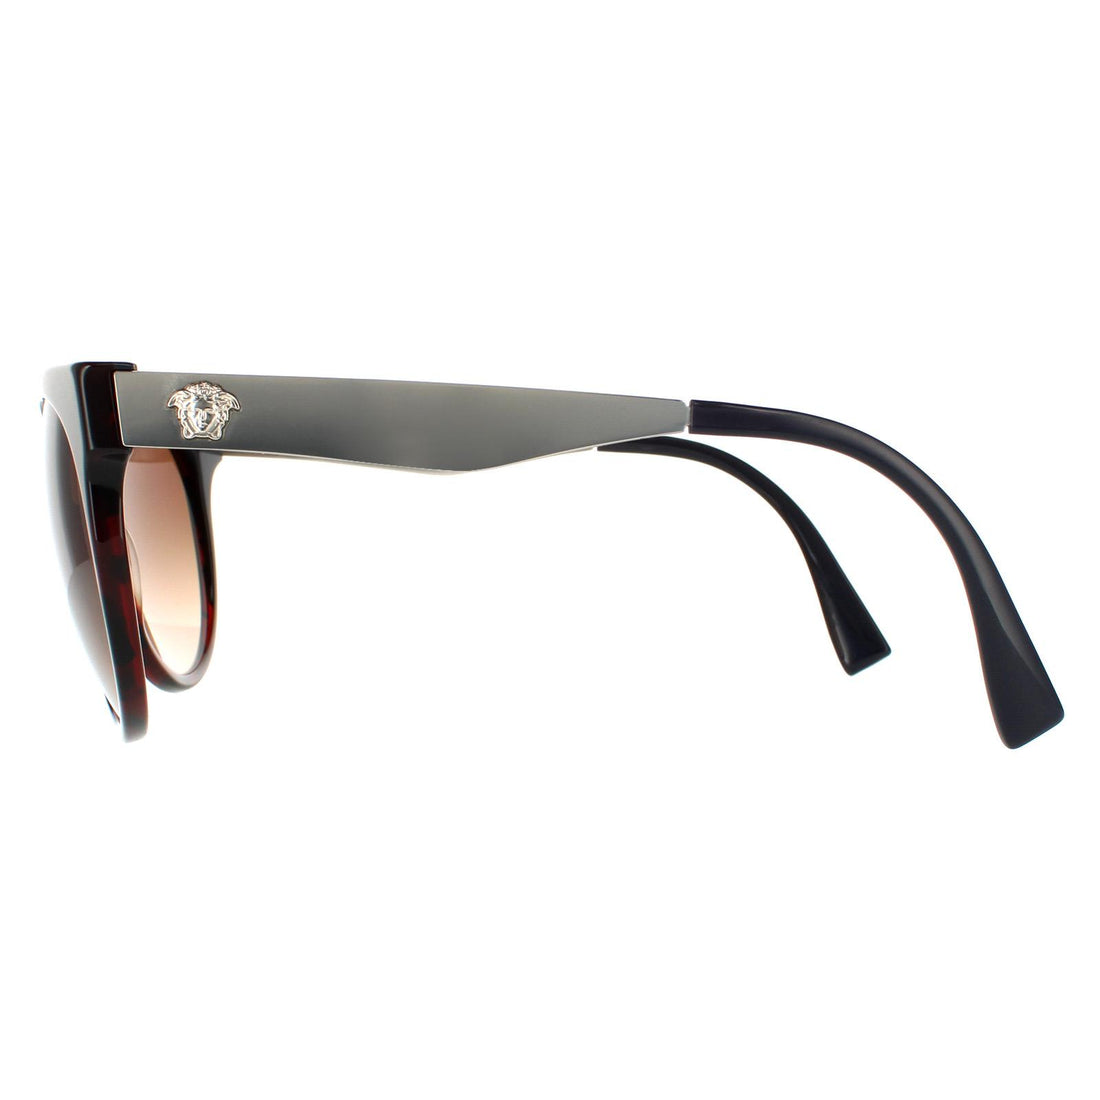 Versace Sunglasses VE4339 525013 Red Havana Blue Brown Gradient